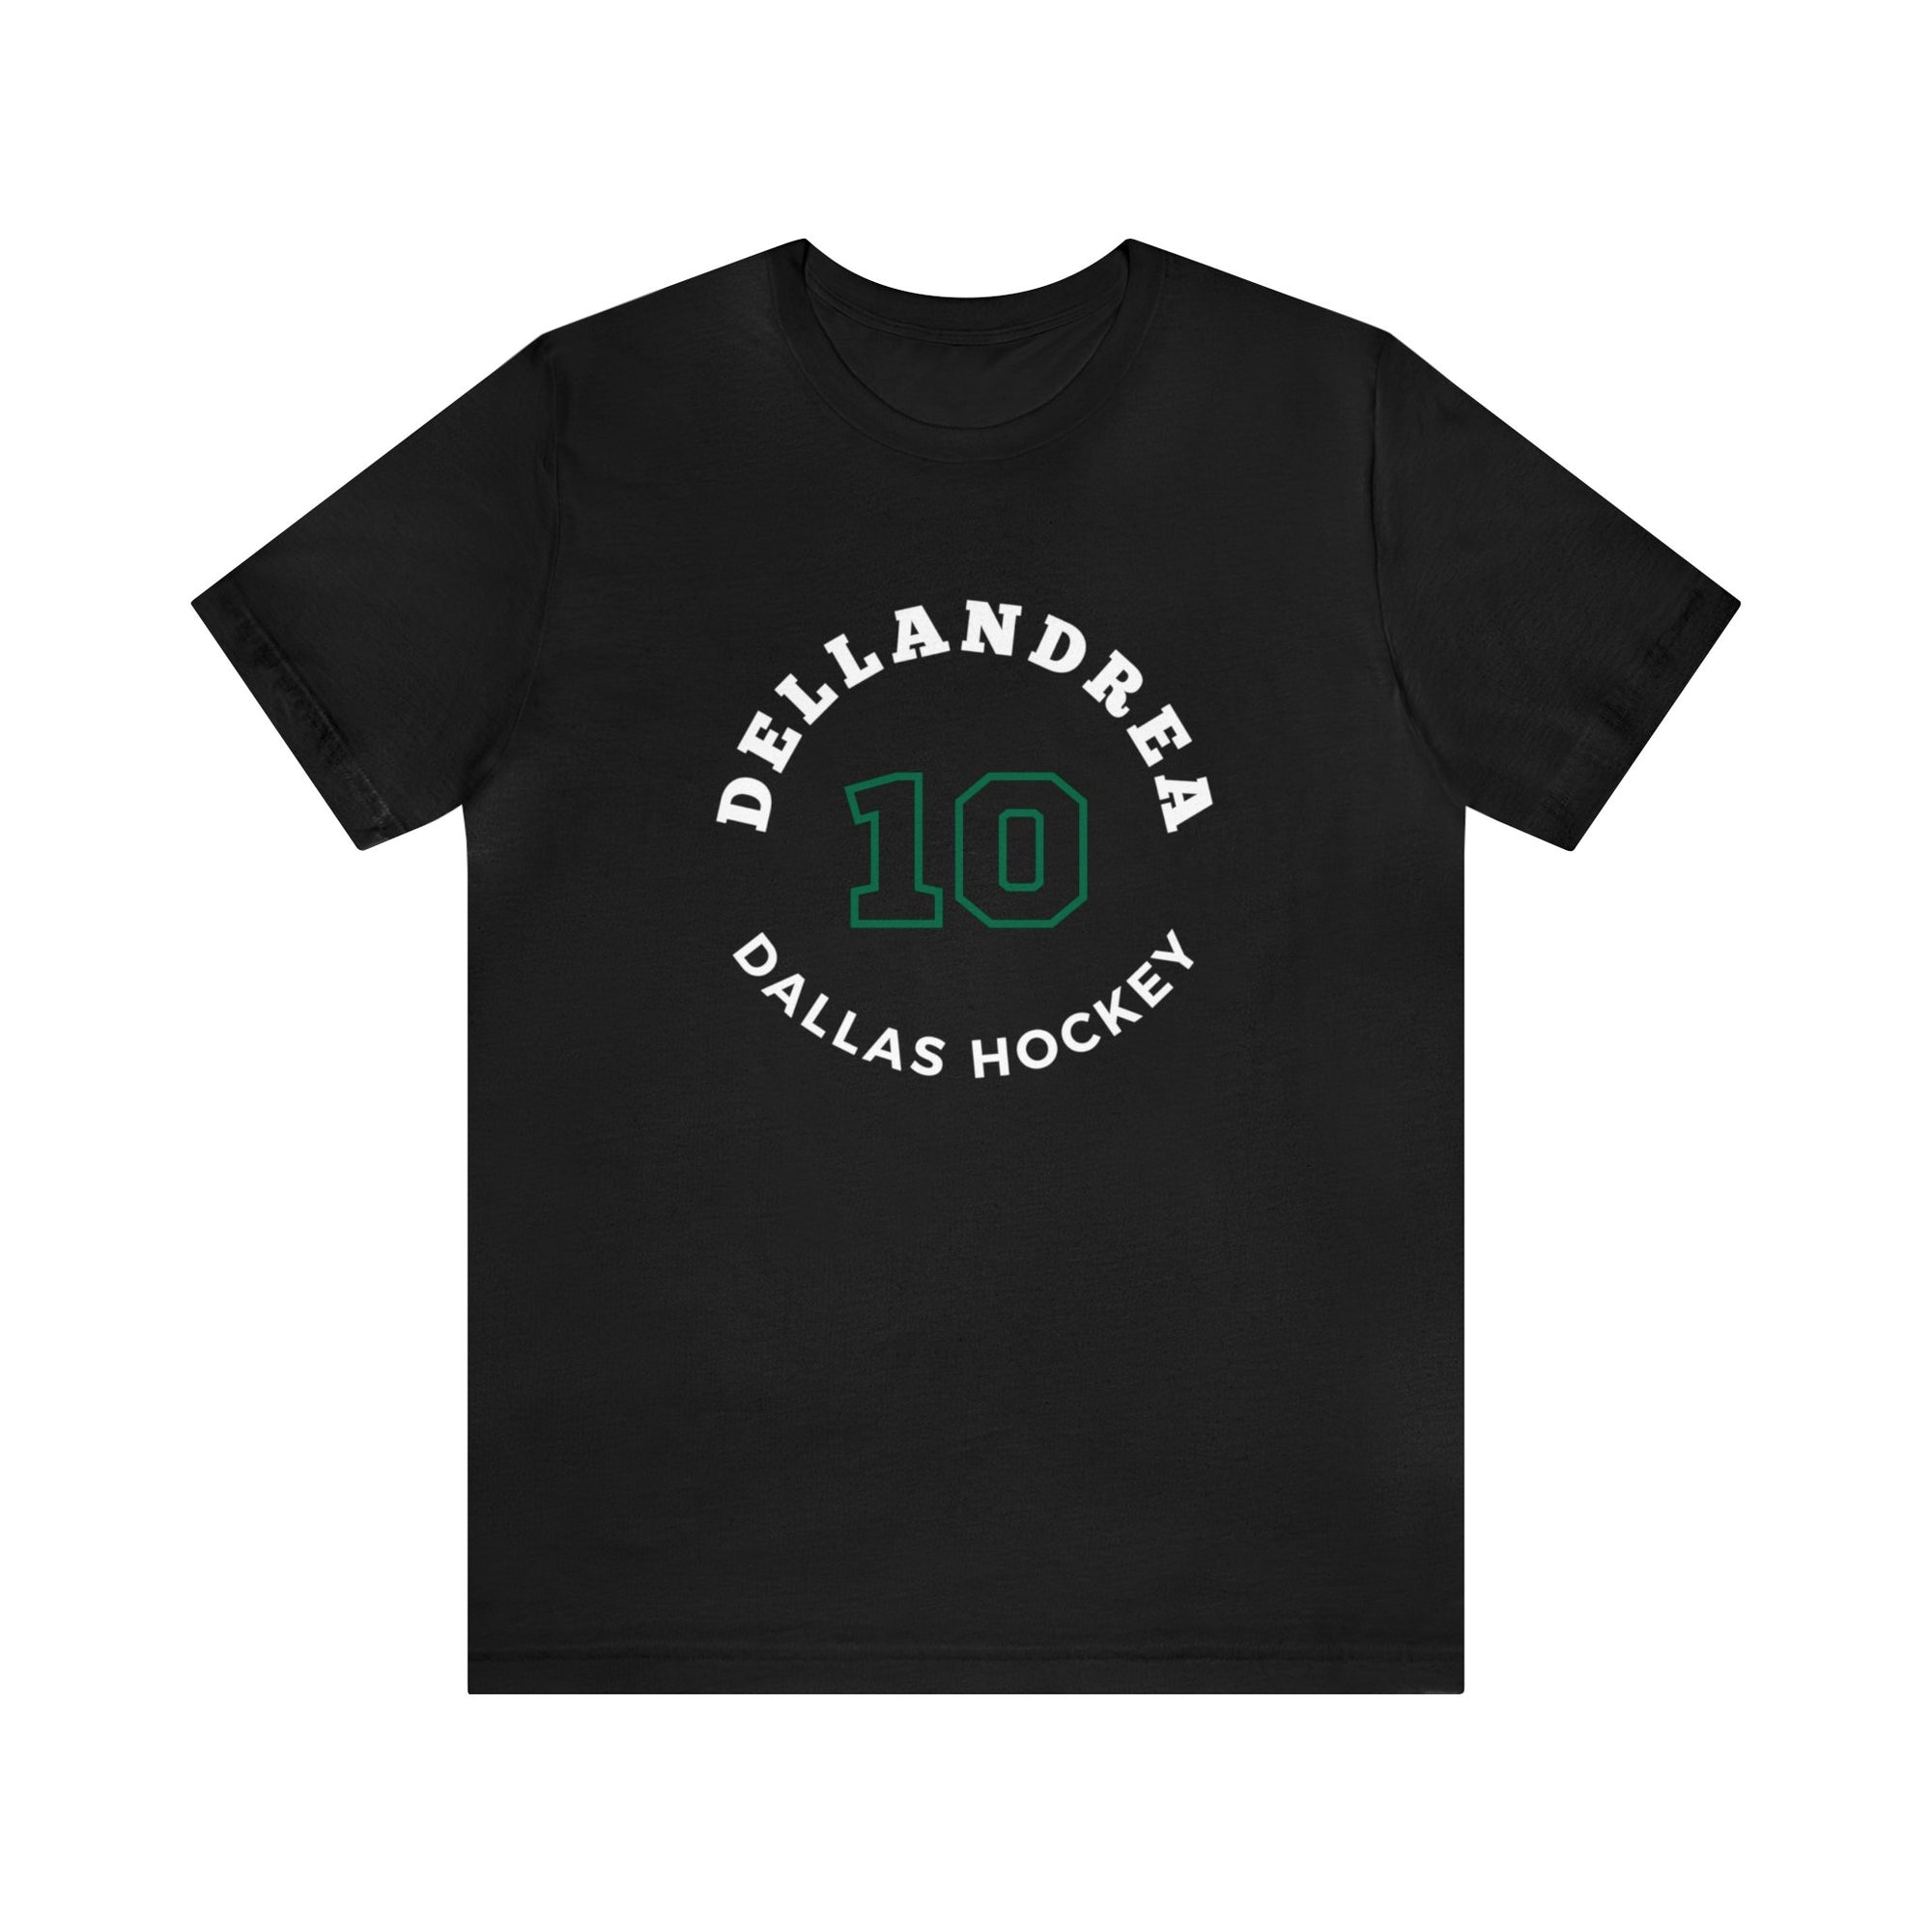 Dellandrea 10 Dallas Hockey Number Arch Design Unisex T-Shirt